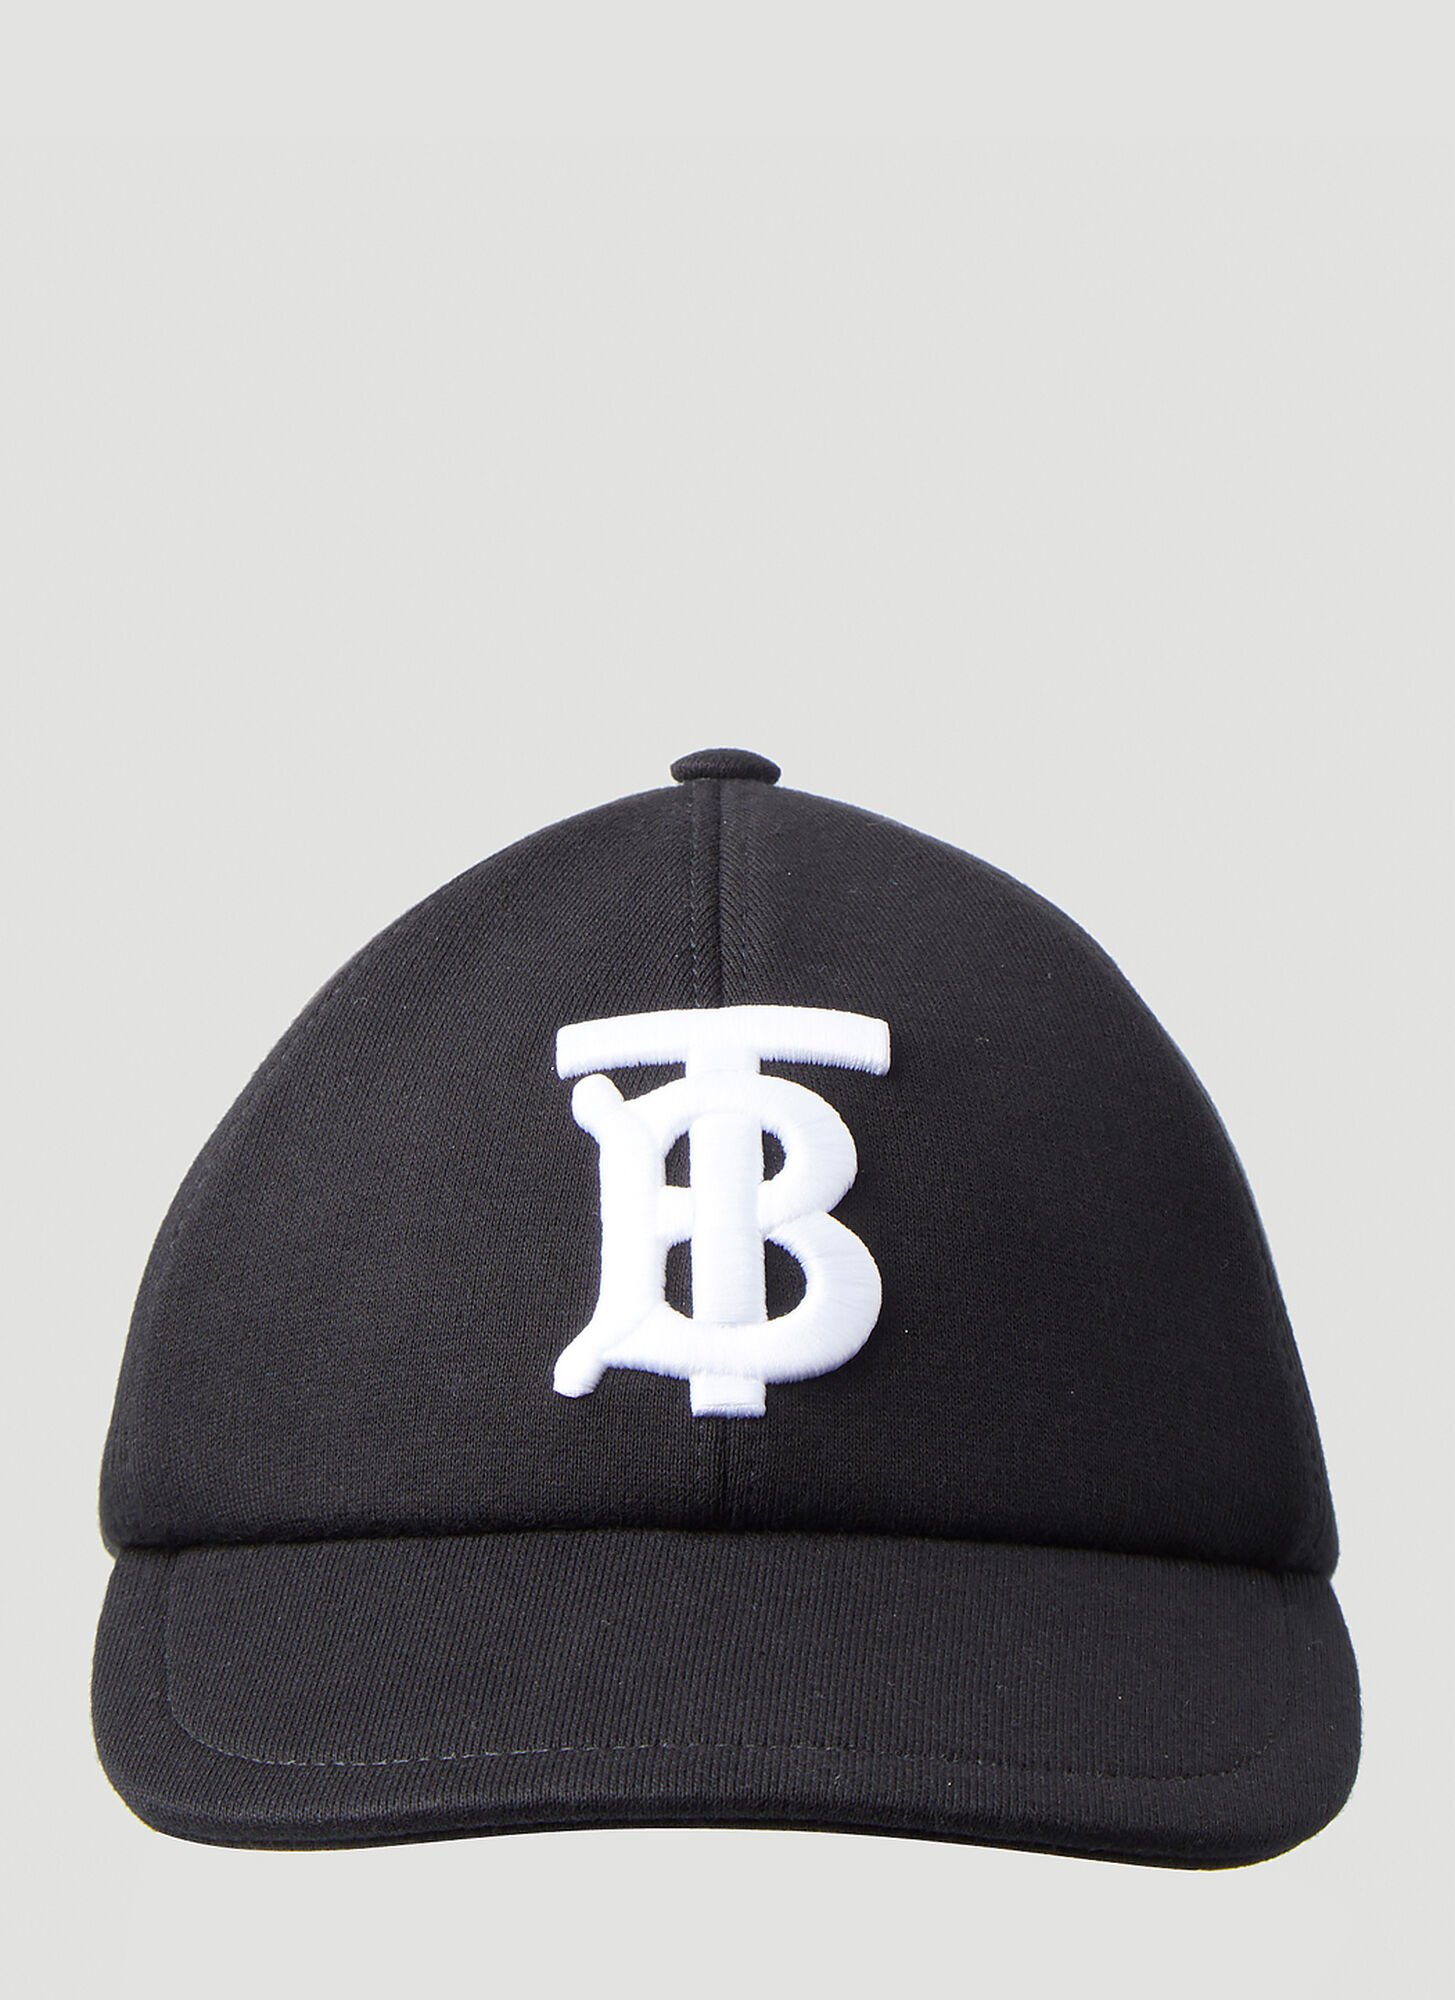 Burberry Tb Monogram Baseball Cap